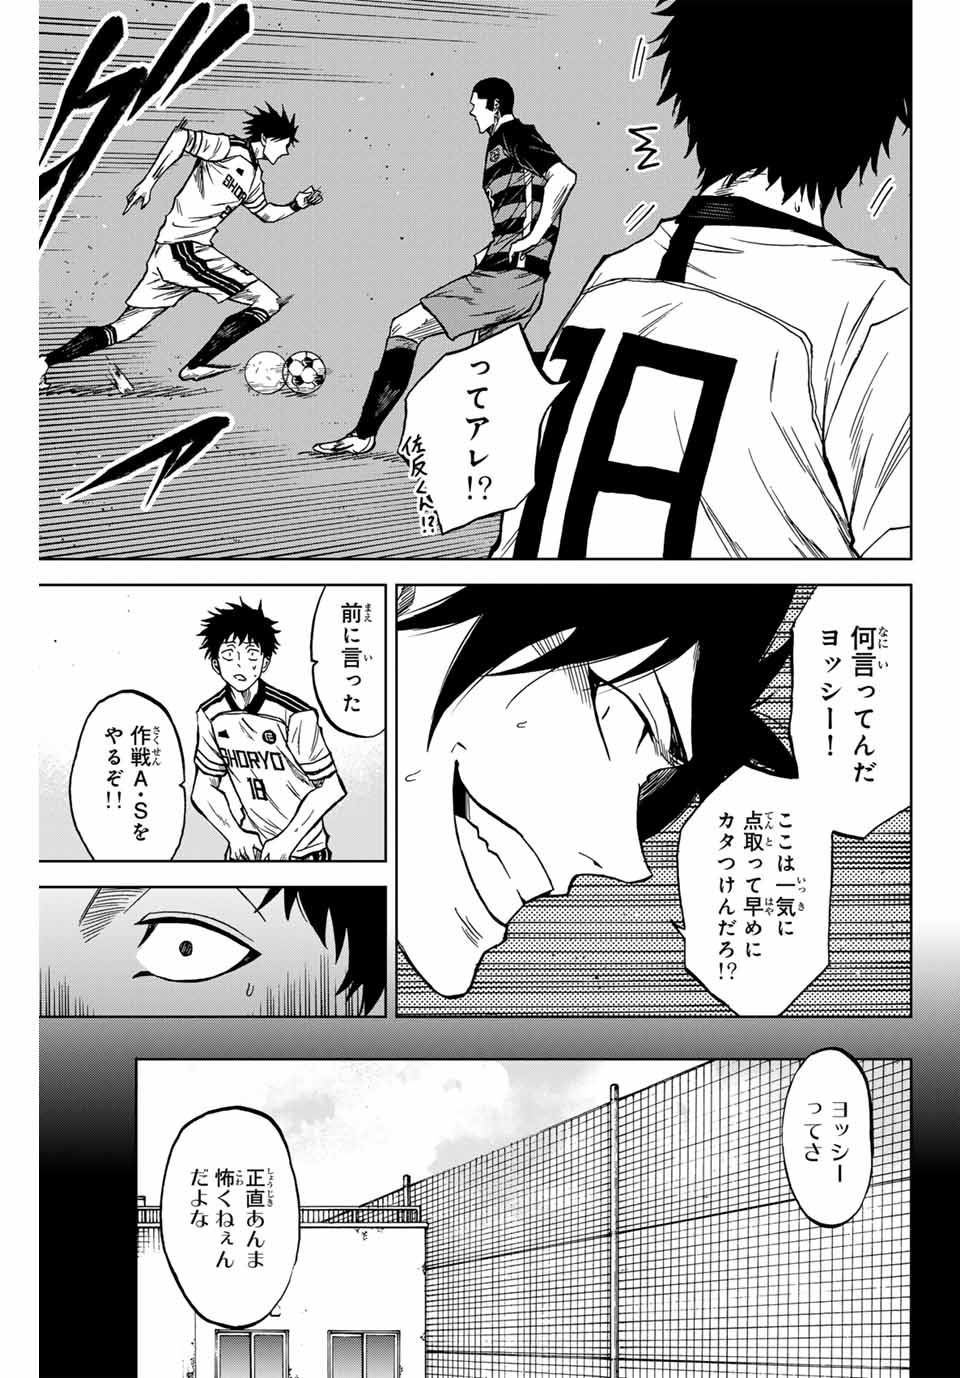 Aoku Somero - Chapter 119 - Page 13